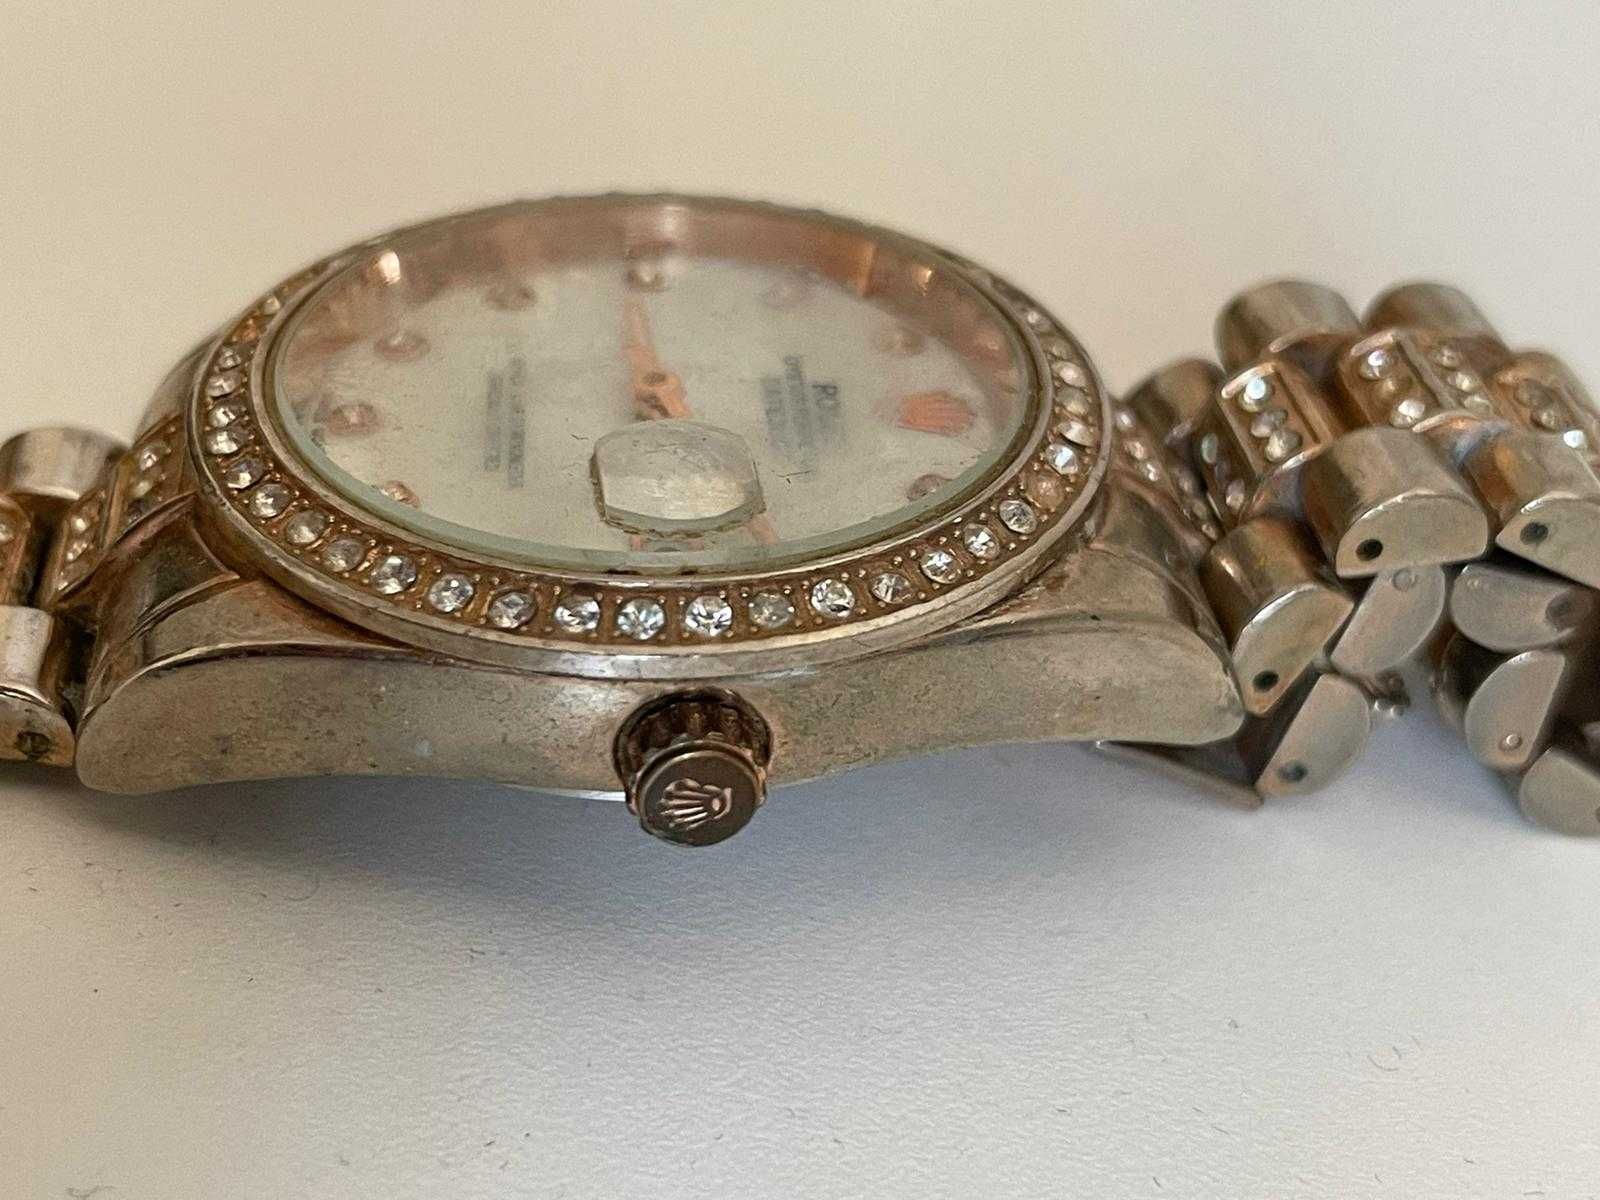 DETERIORAT Rolex Oyster Perpetual Ladies Diamond Watch